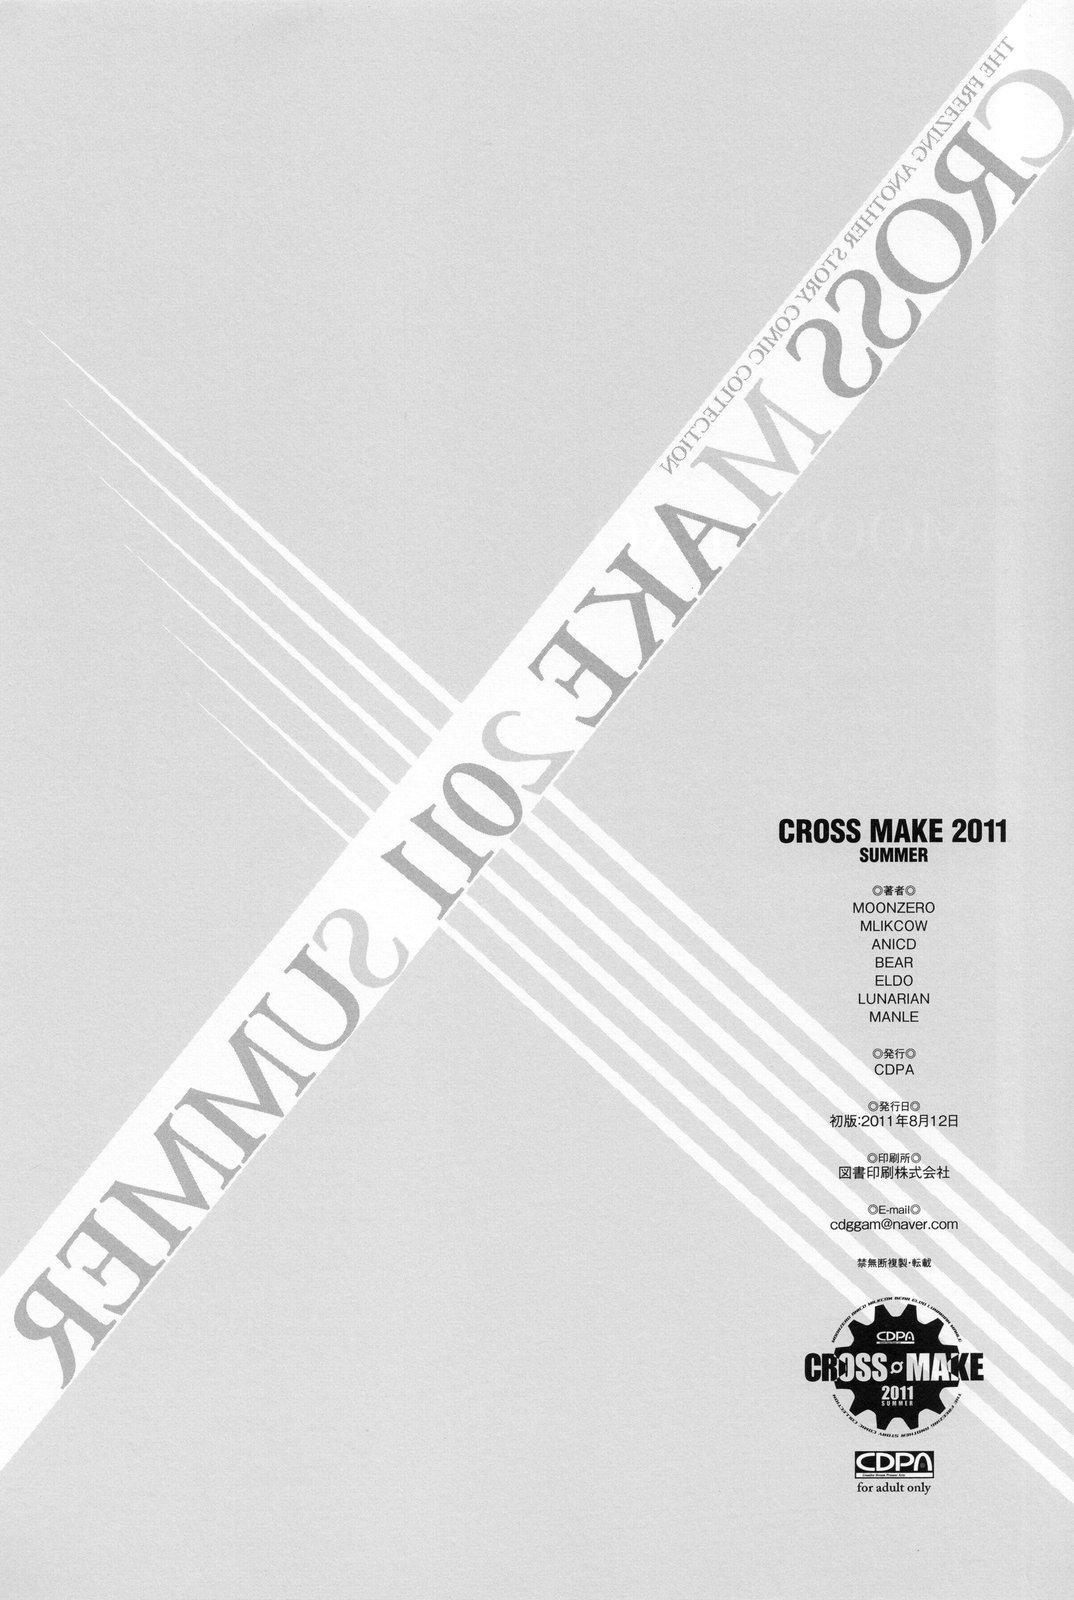 CROSS MAKE 2011 SUMMER 122